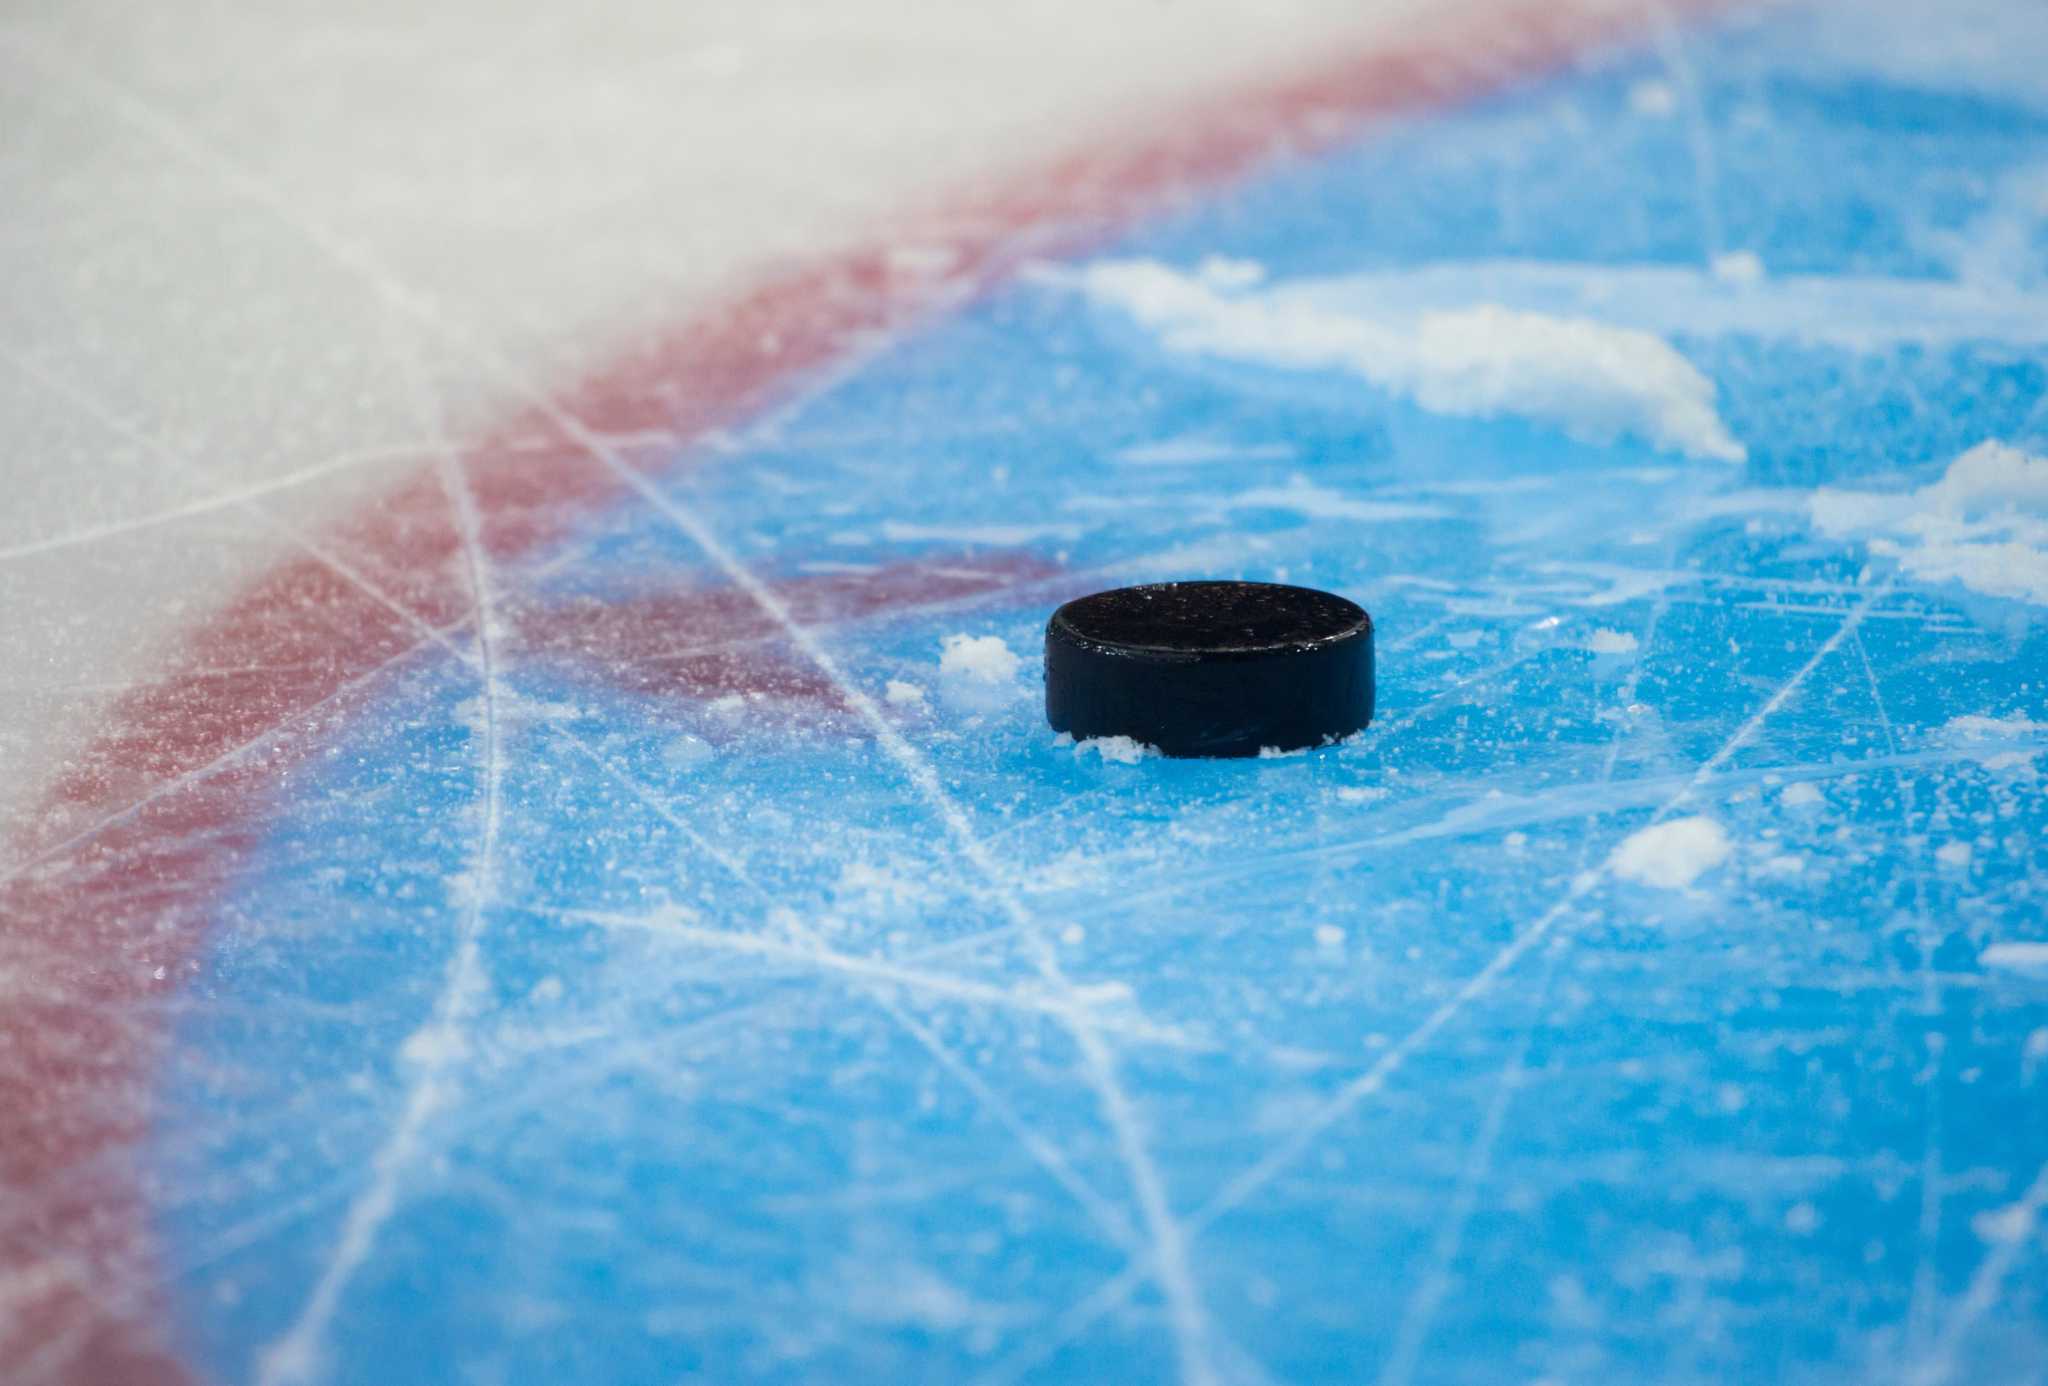 Connecticut: High school hockey player's death ruled accidental